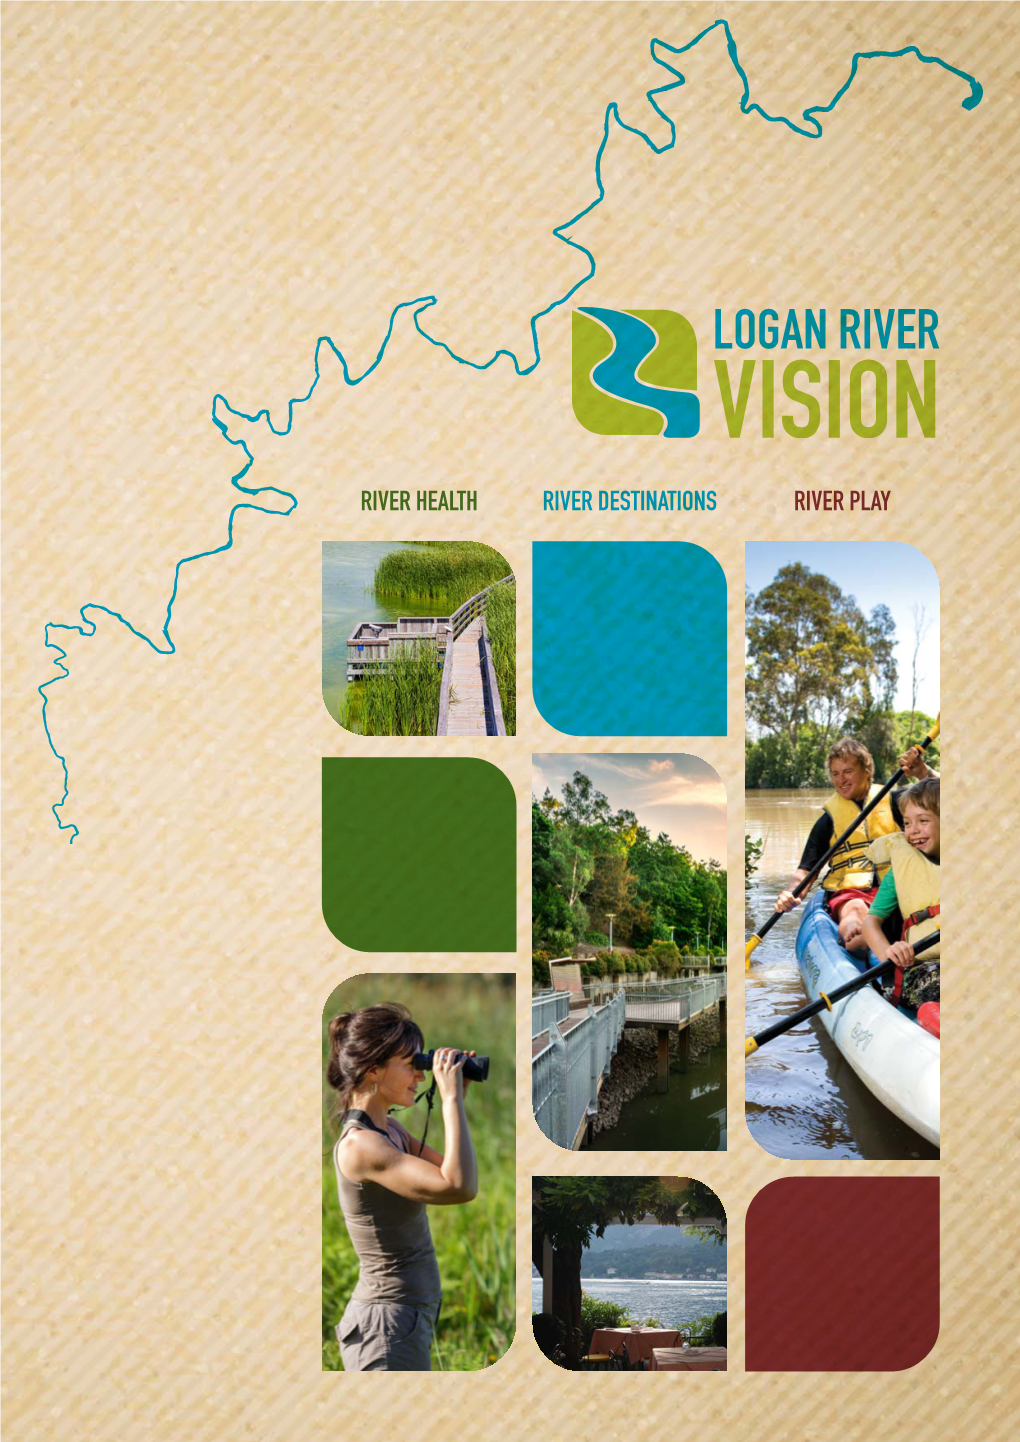 Logan River Vision